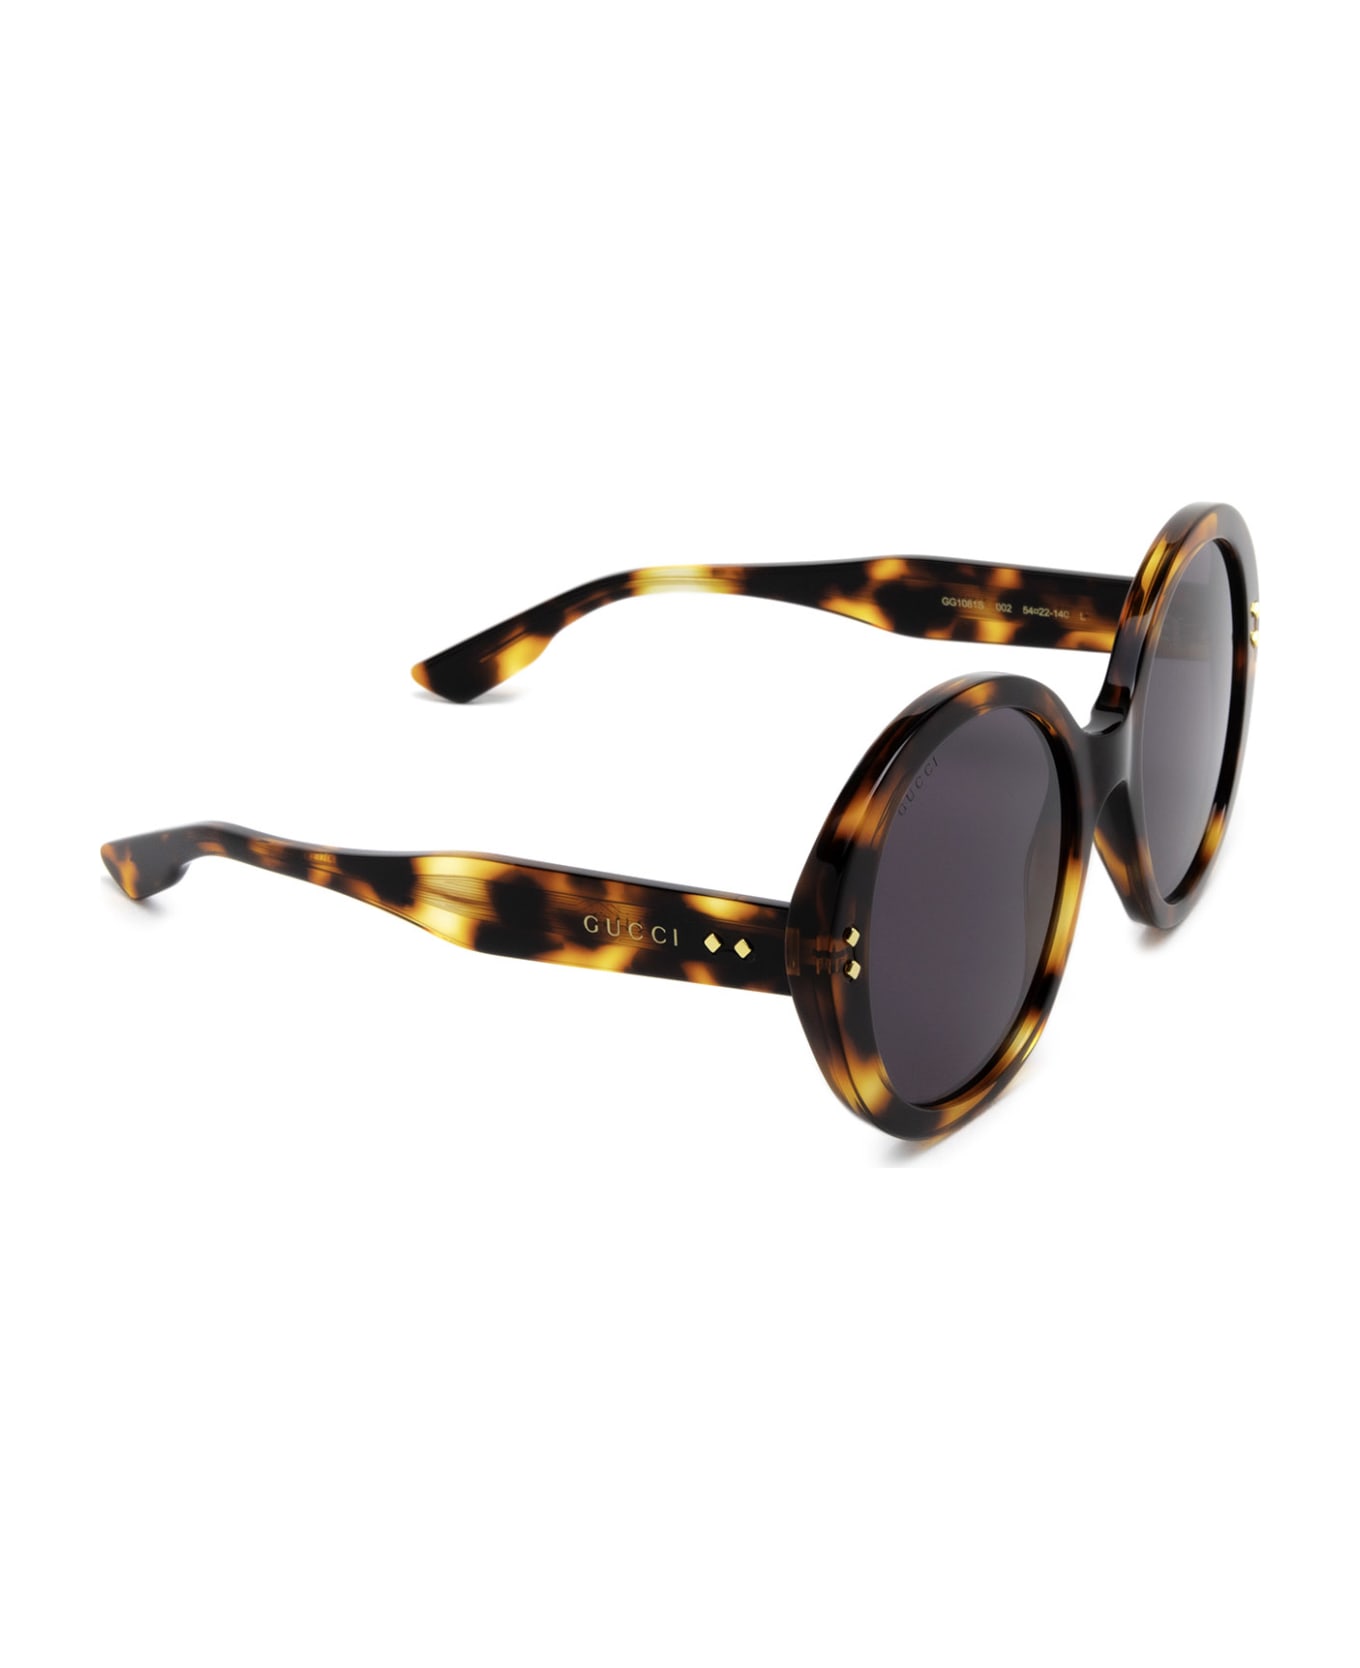 Gucci Eyewear Gg1081s Havana Sunglasses - Havana サングラス